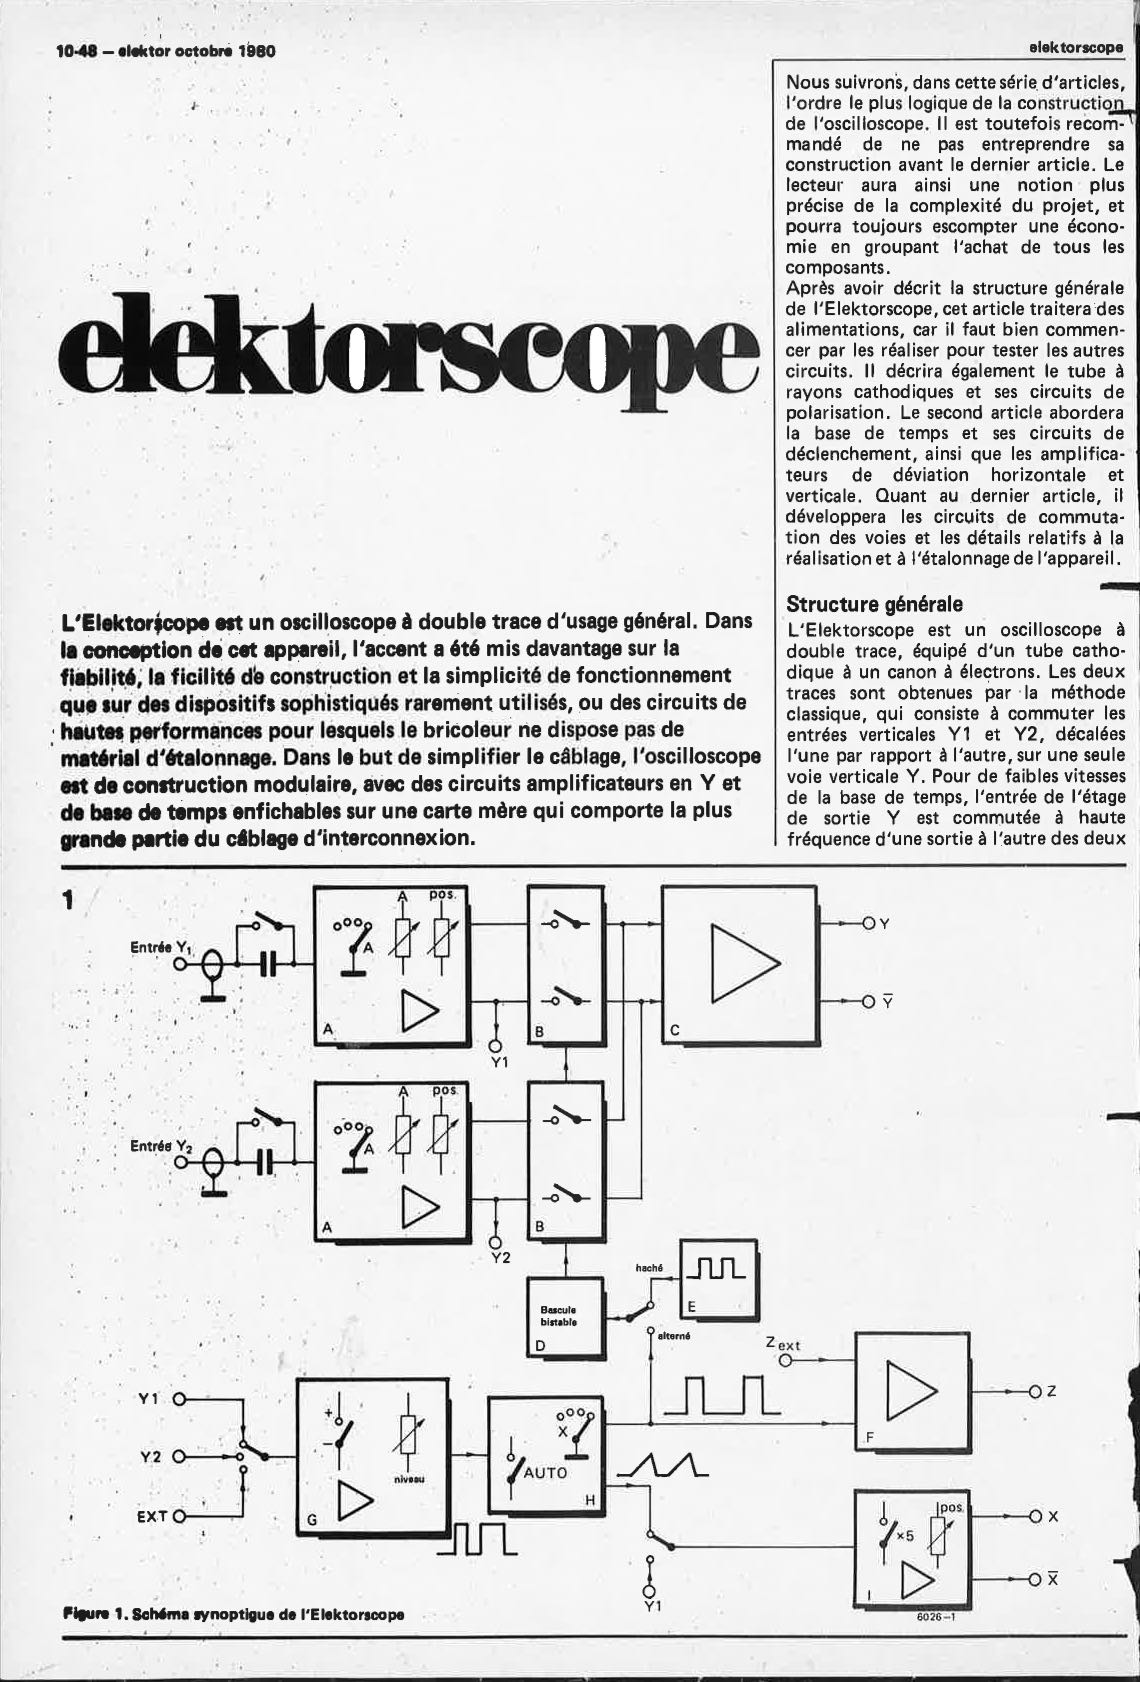 Elektorscope 1